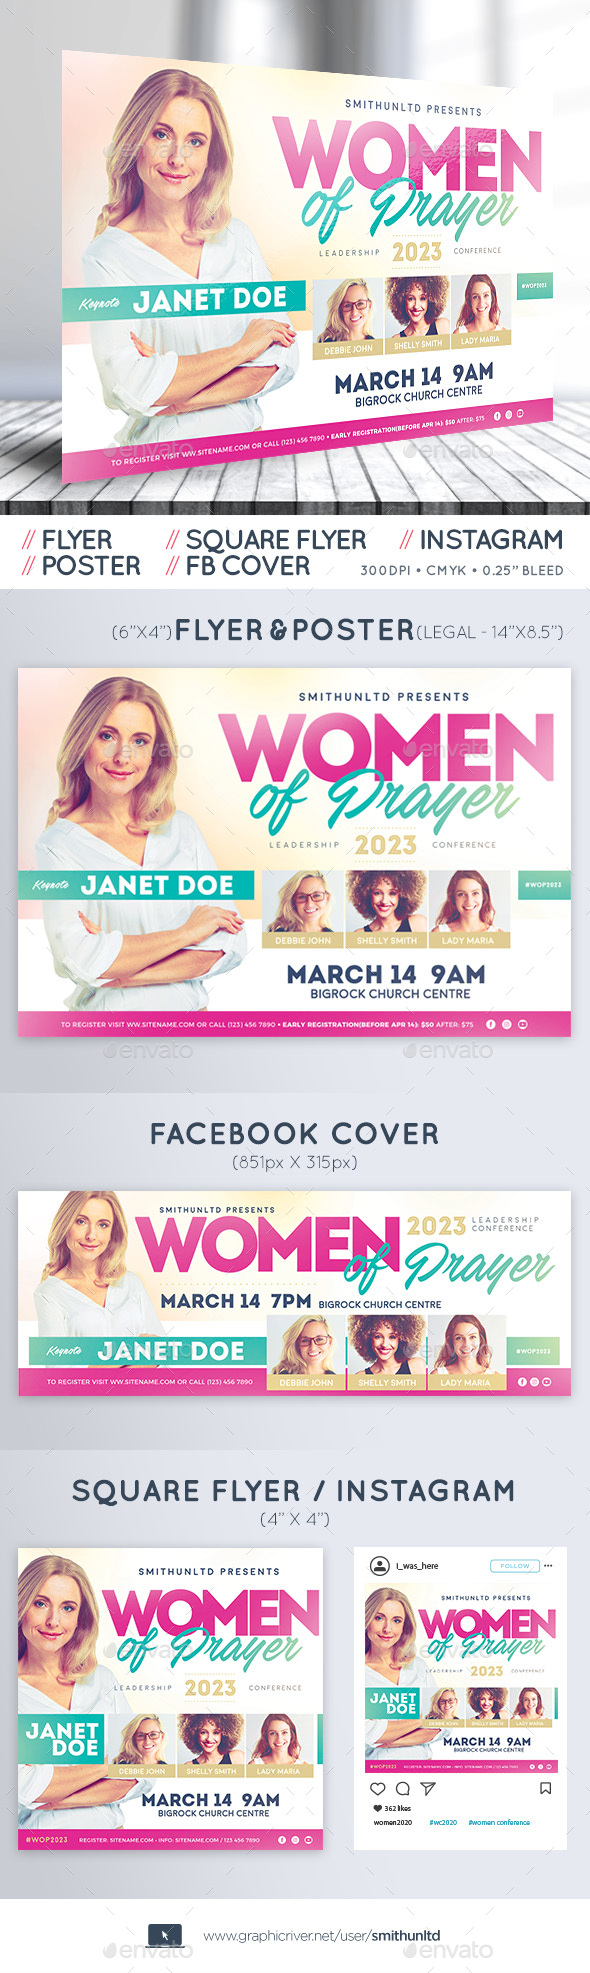 Women Conference Flyer - Prayer - Complete Set